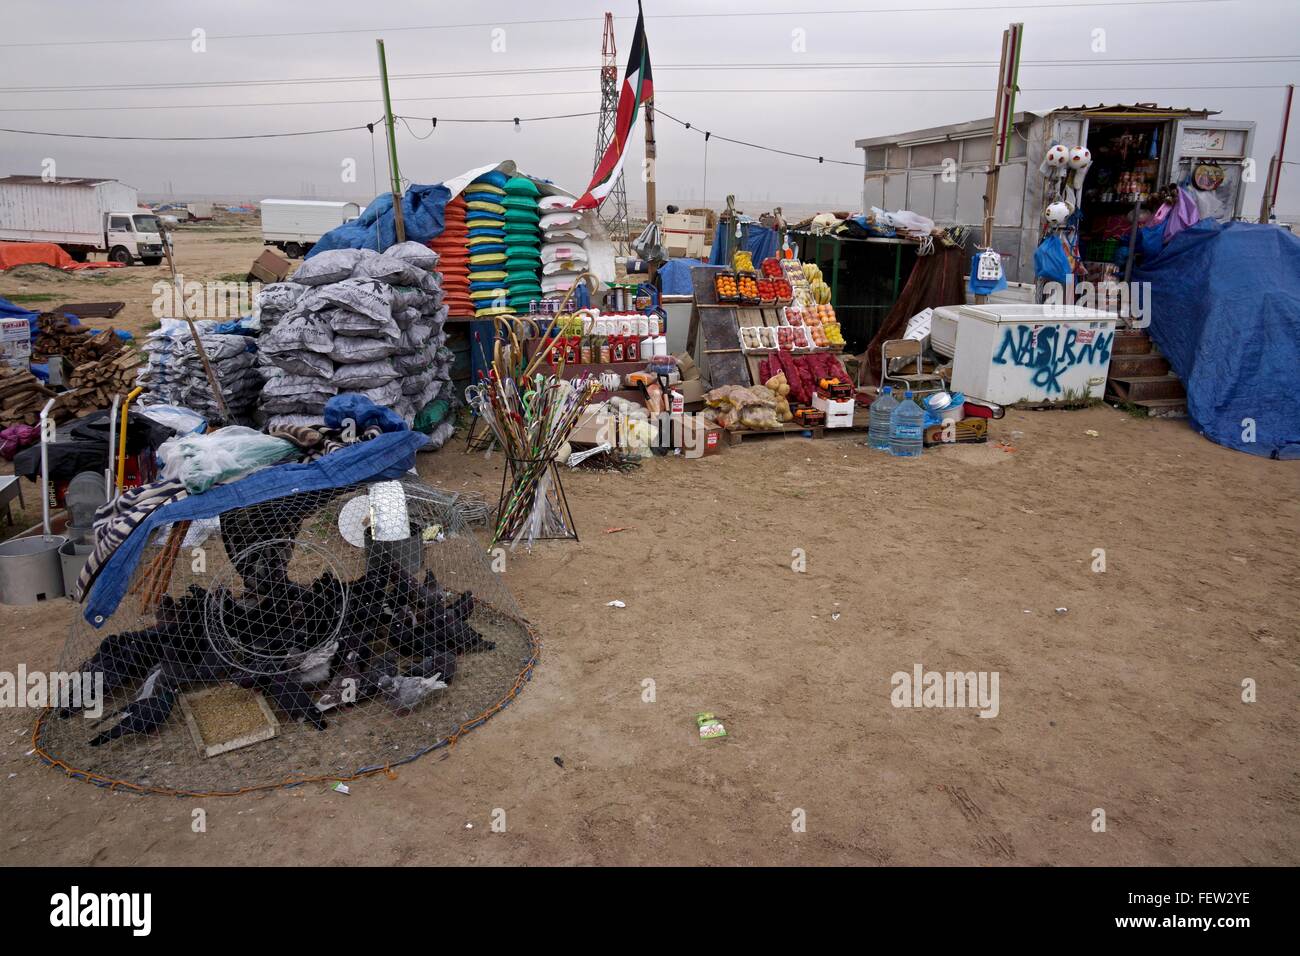 Outdoor market stall in the desert Stock Photo